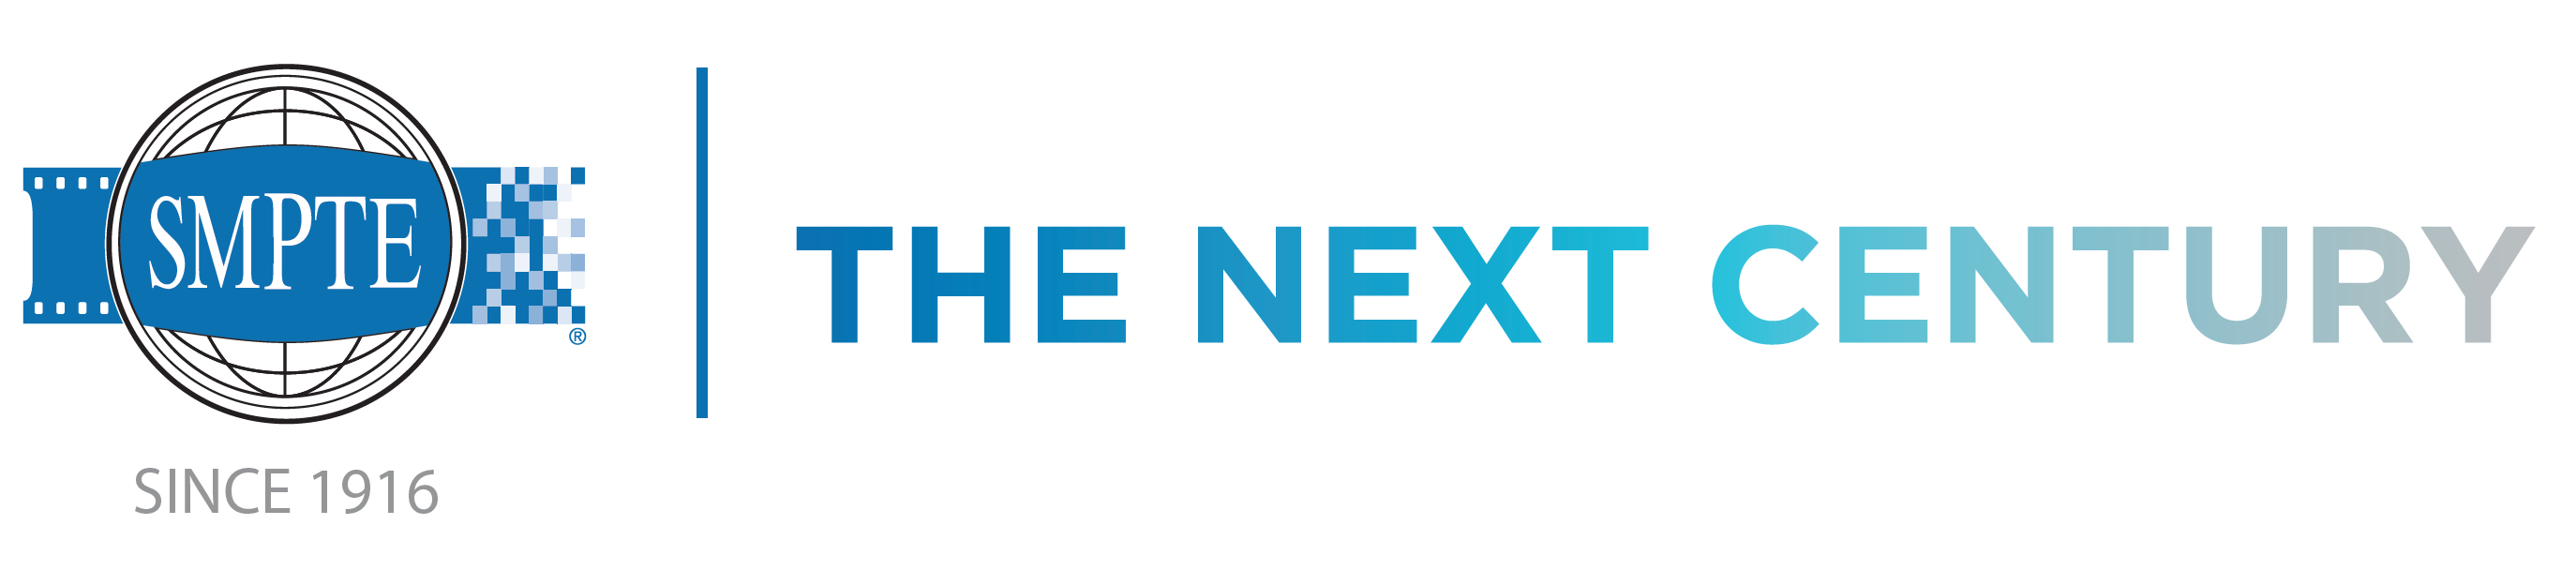 SMPTE Logo with Next Century Tagline